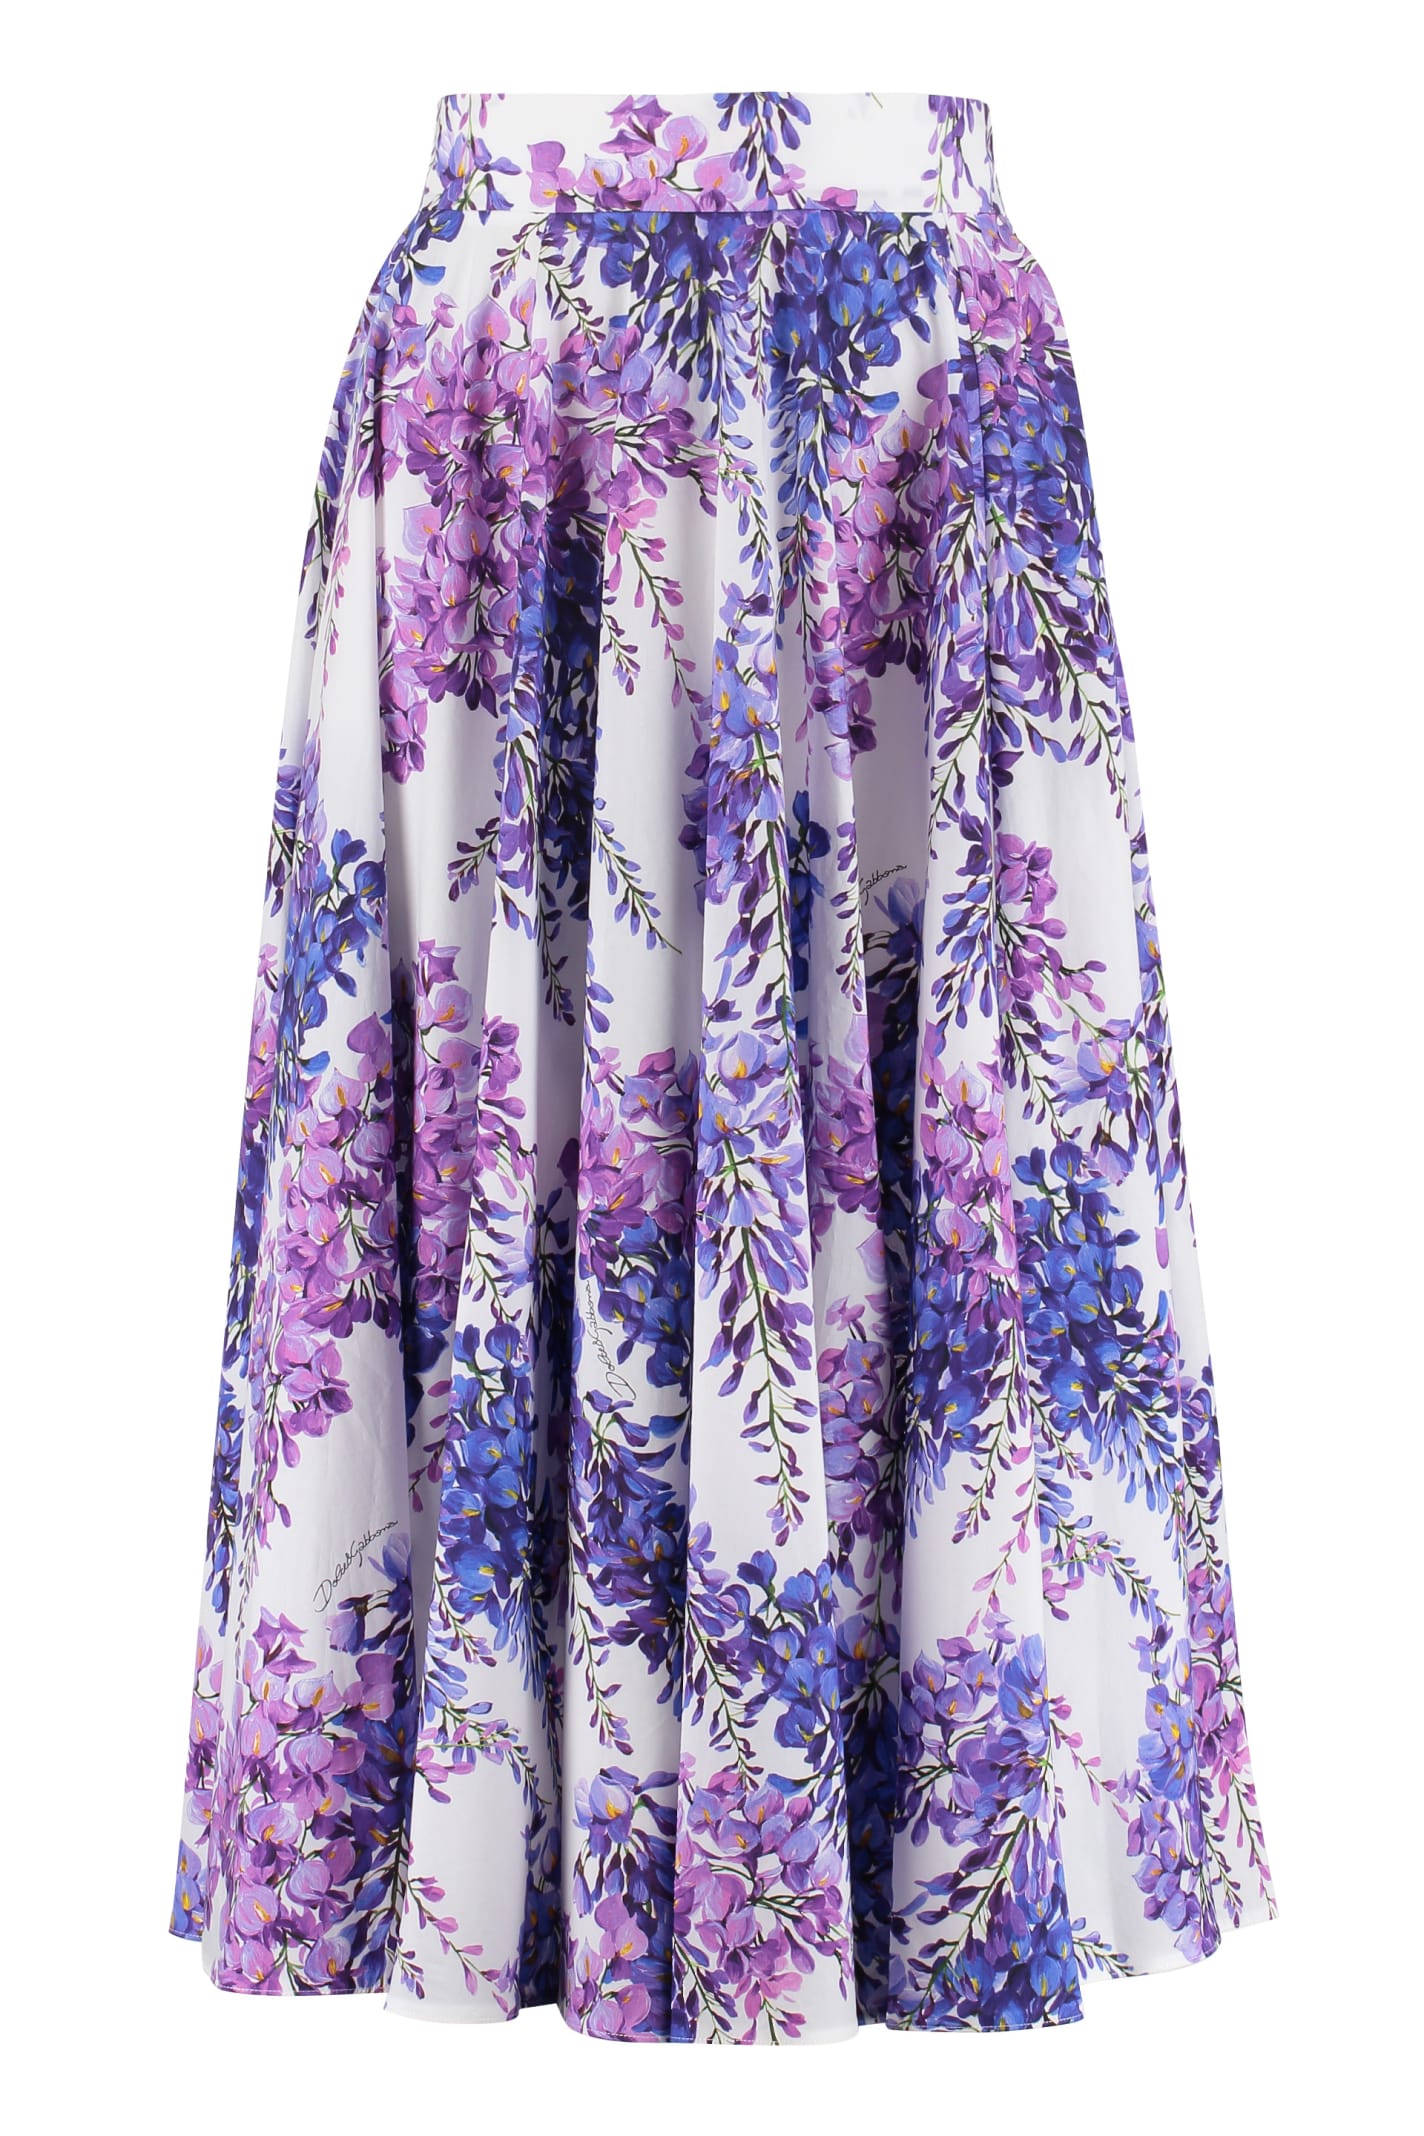 Dolce & Gabbana Cotton Pencil Skirt